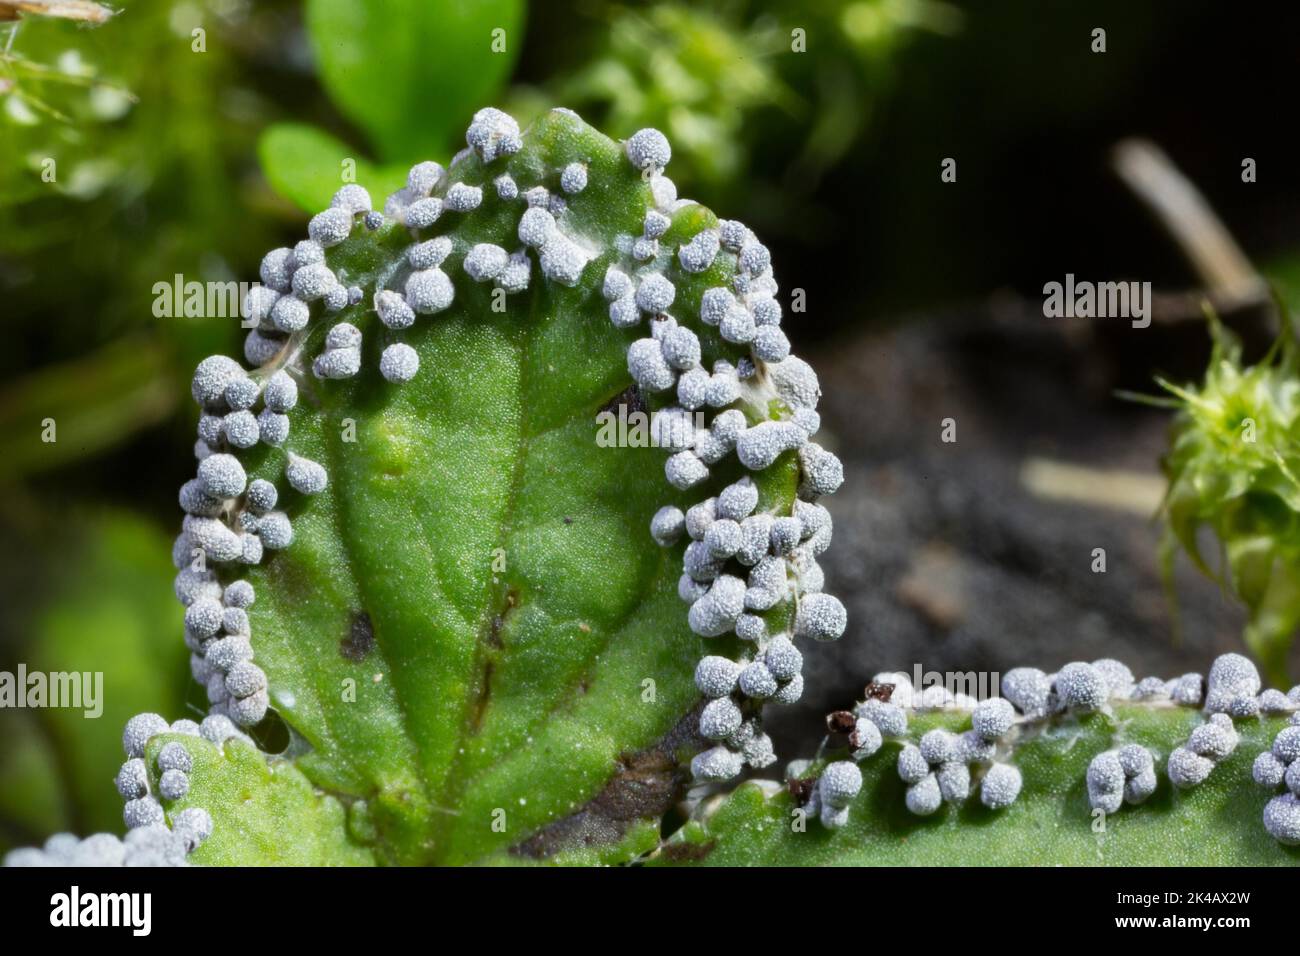 Muffa di calce Physarum leucopus molti corpi fruttati impollinati di calce su foglie verdi Foto Stock